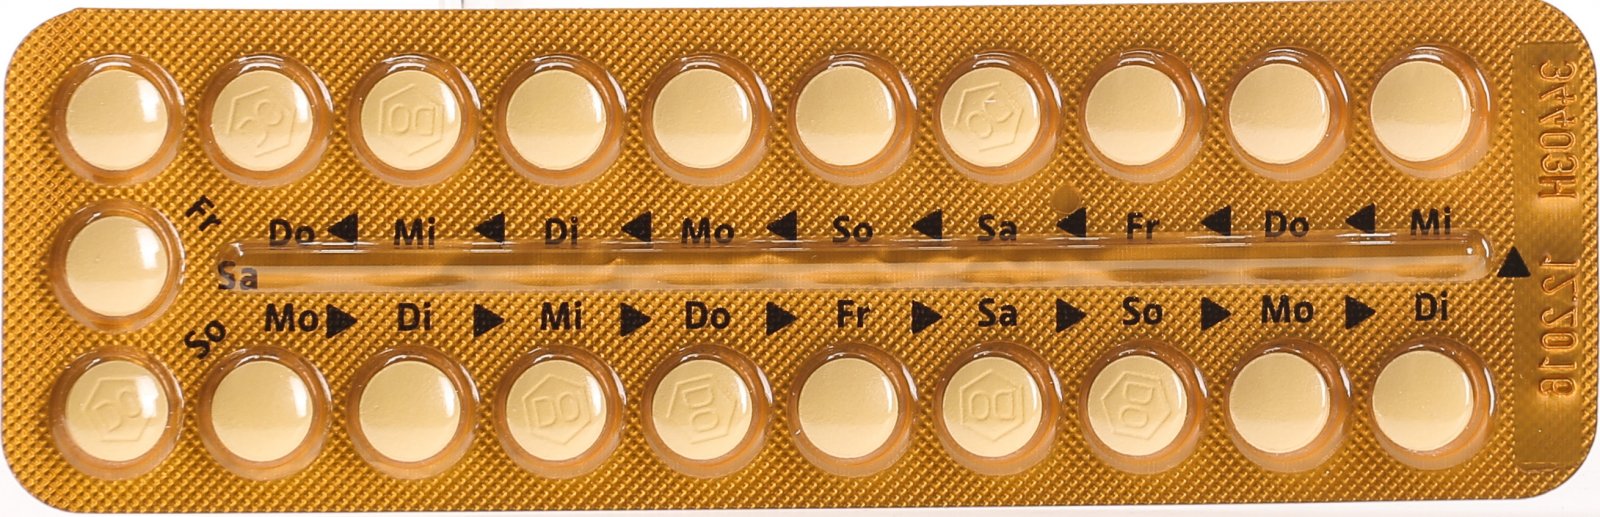 Pharma Yasminelle Pille Preis 1 Monat Buying Zovirax Online Uk Female Viagra Malaysia Buy Viagra And Cilas